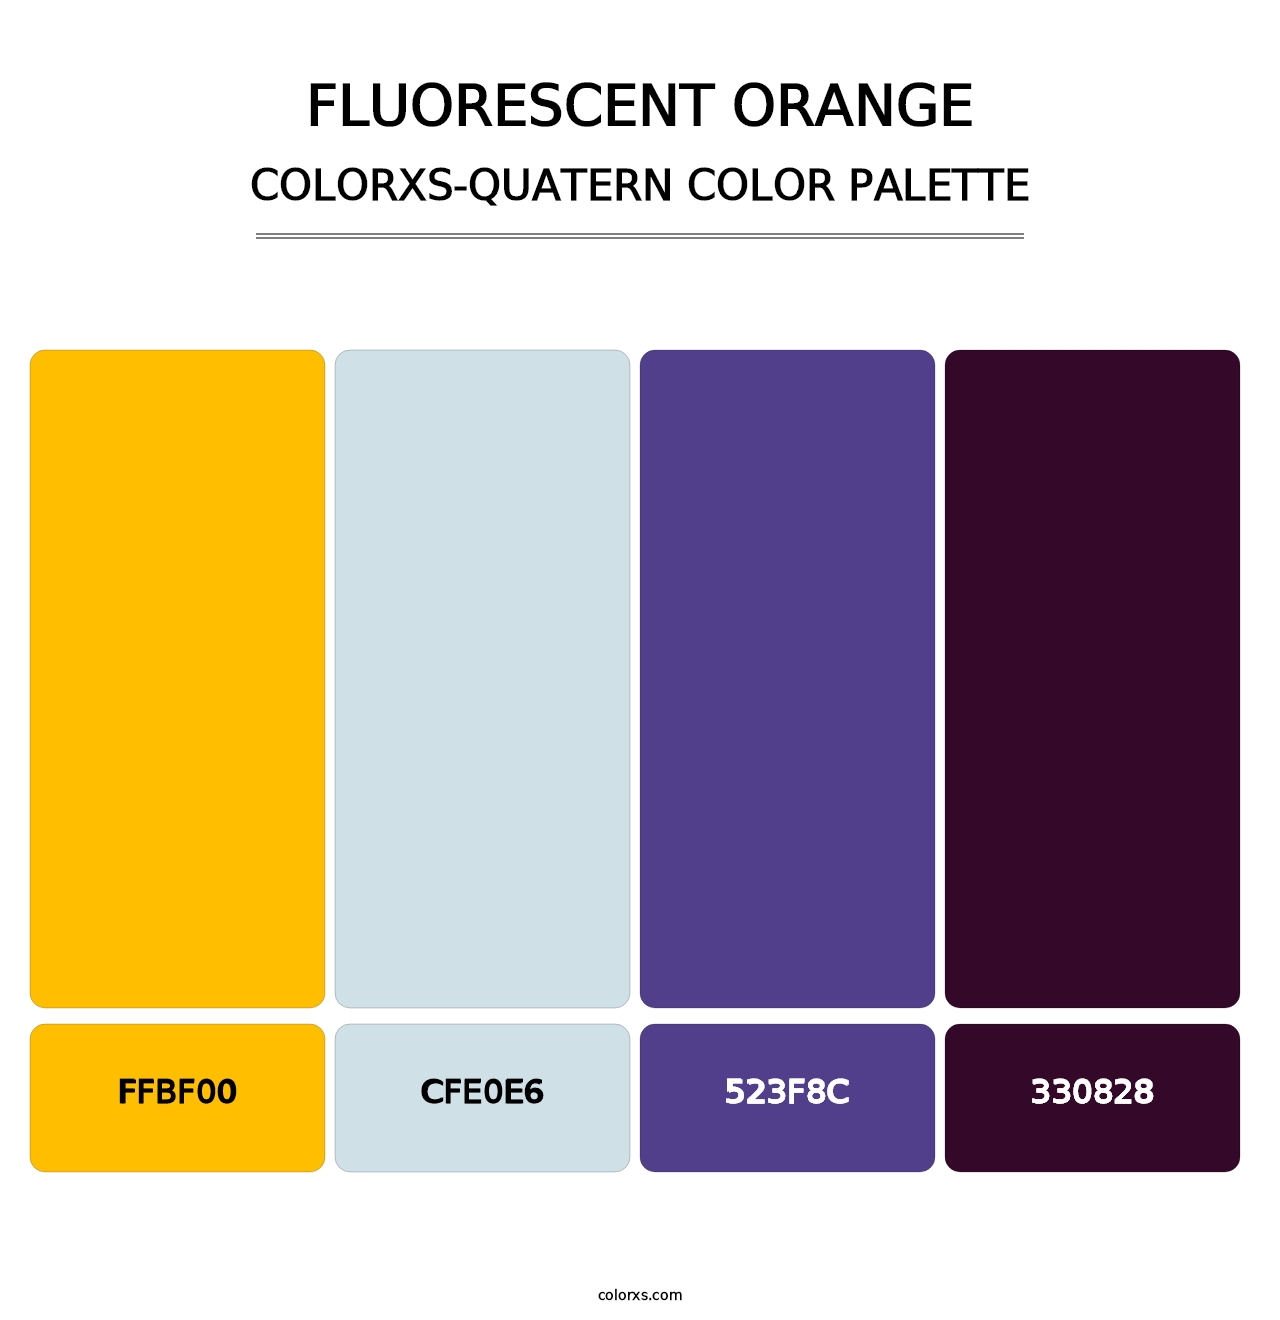 Fluorescent Orange - Colorxs Quatern Palette